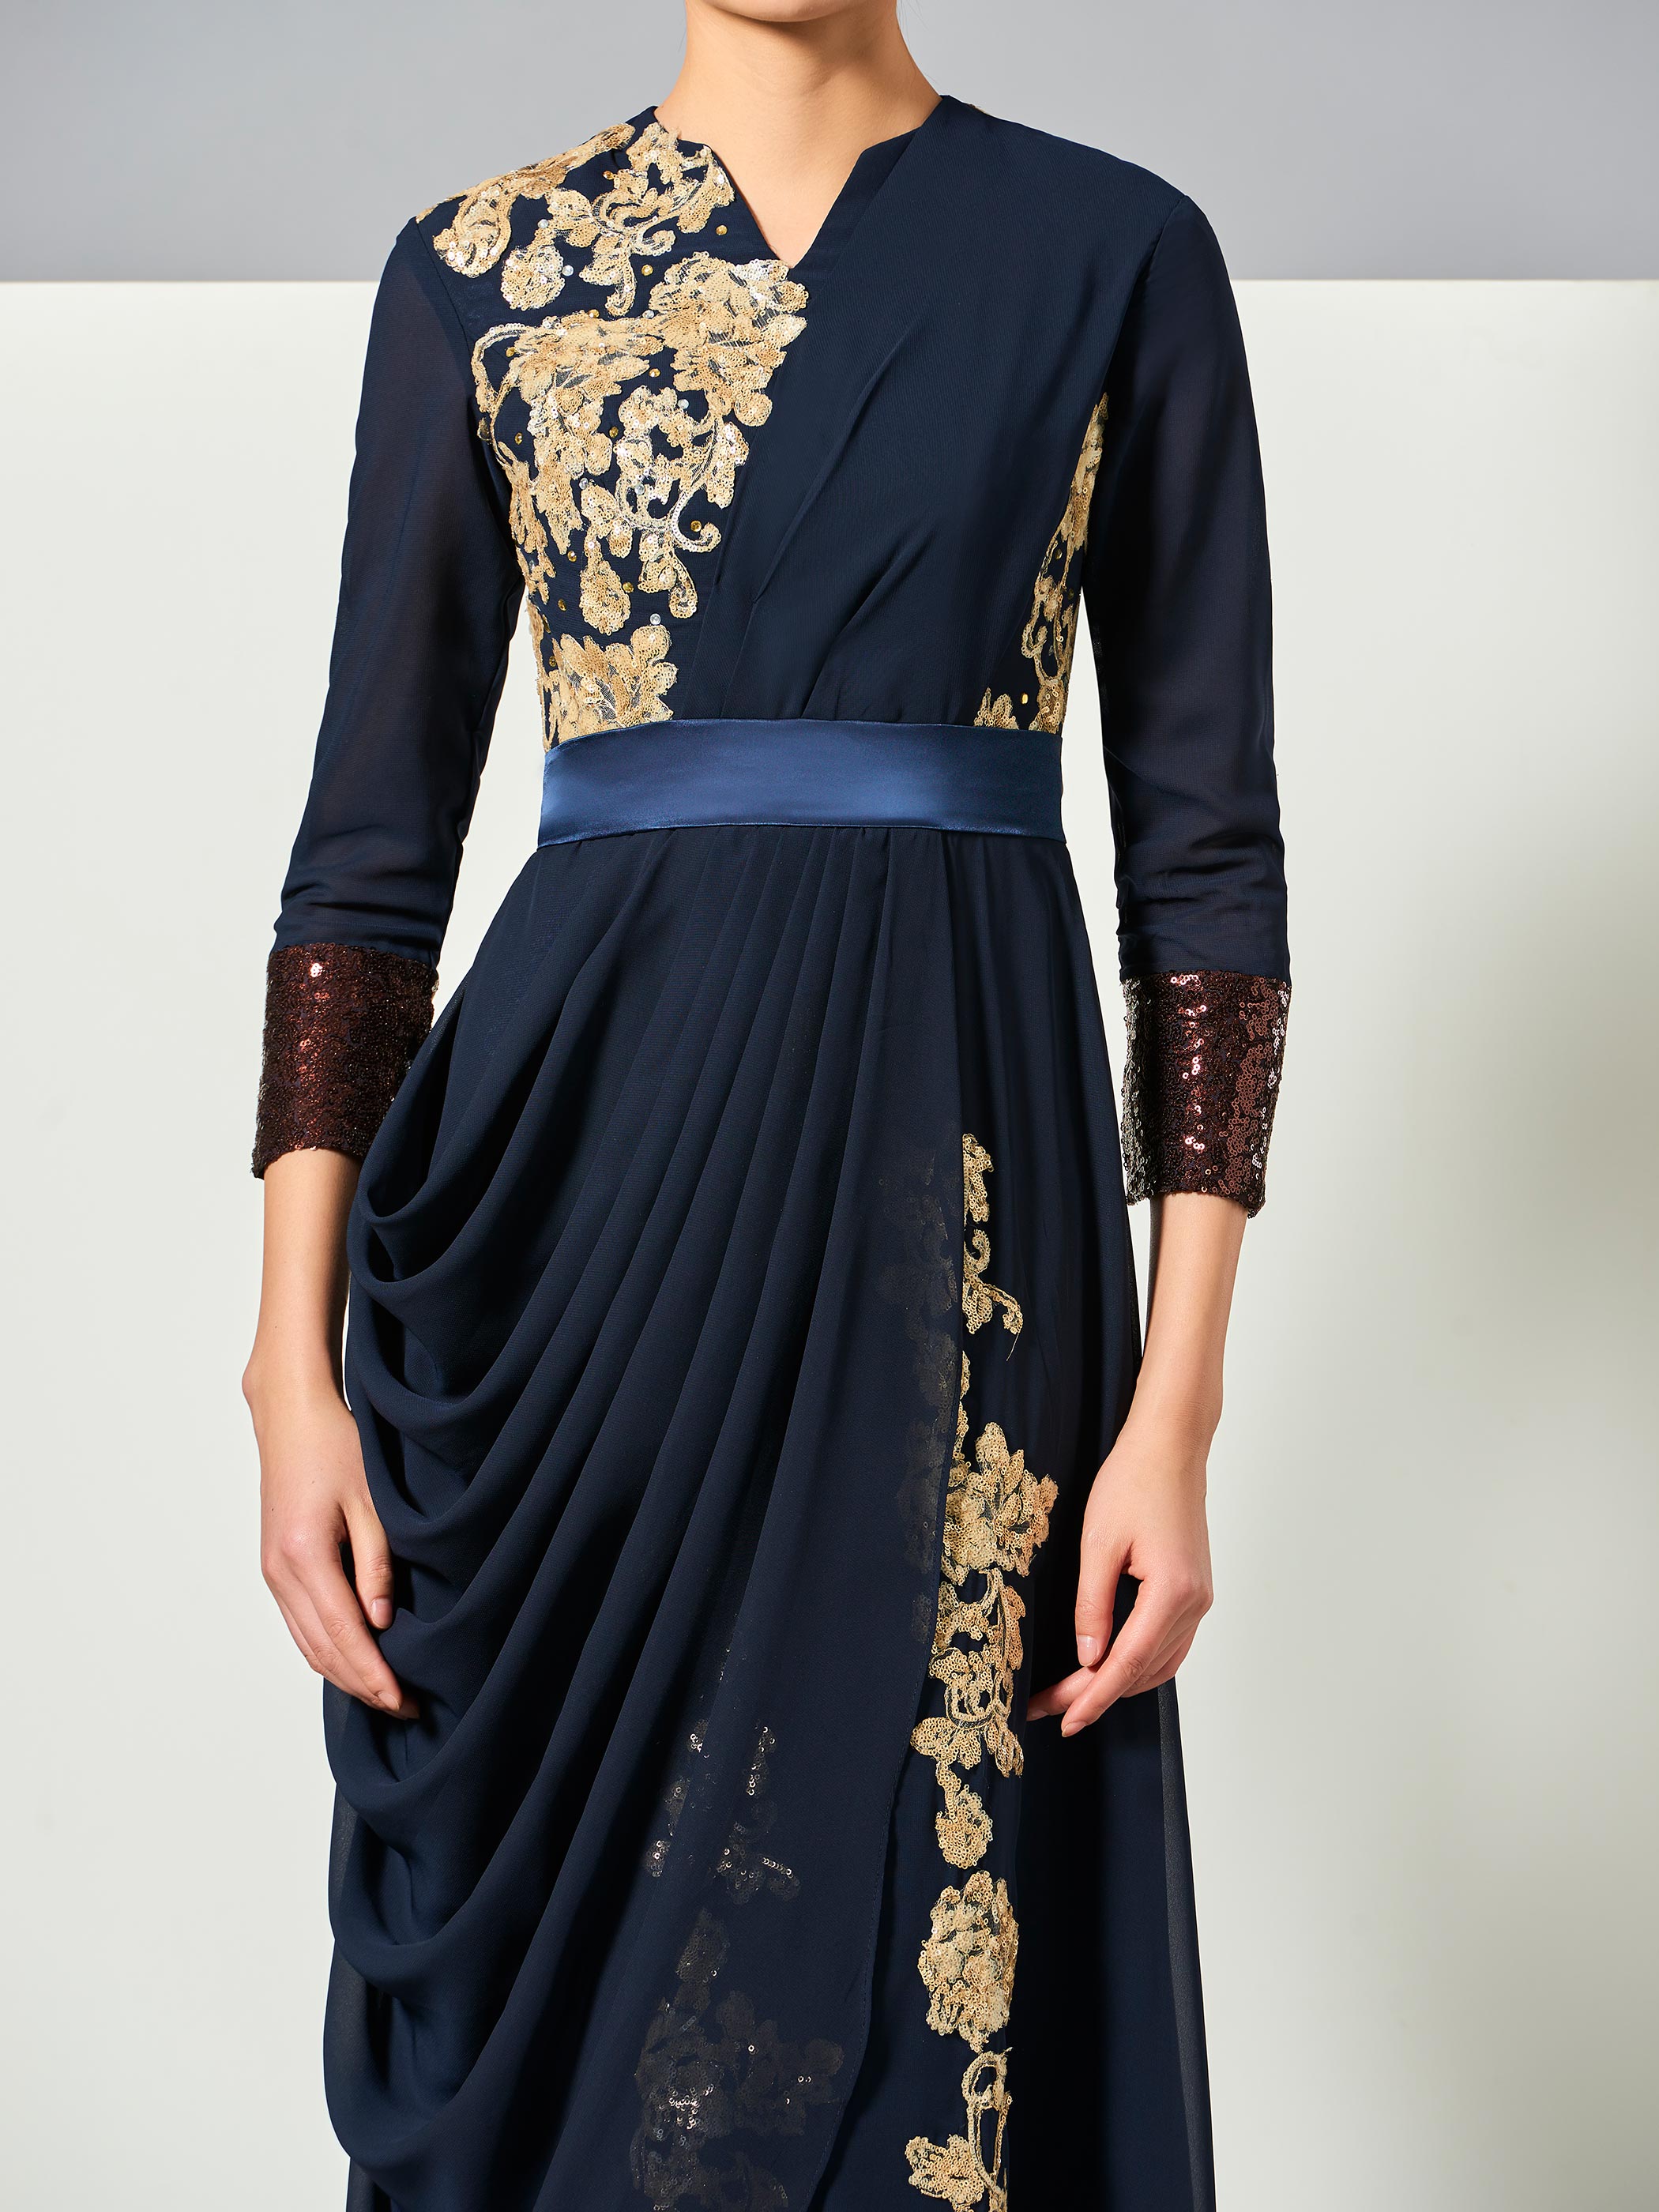 Ericdress Arabic Style A Line Long Sleeve Applique Lace Evening Dress